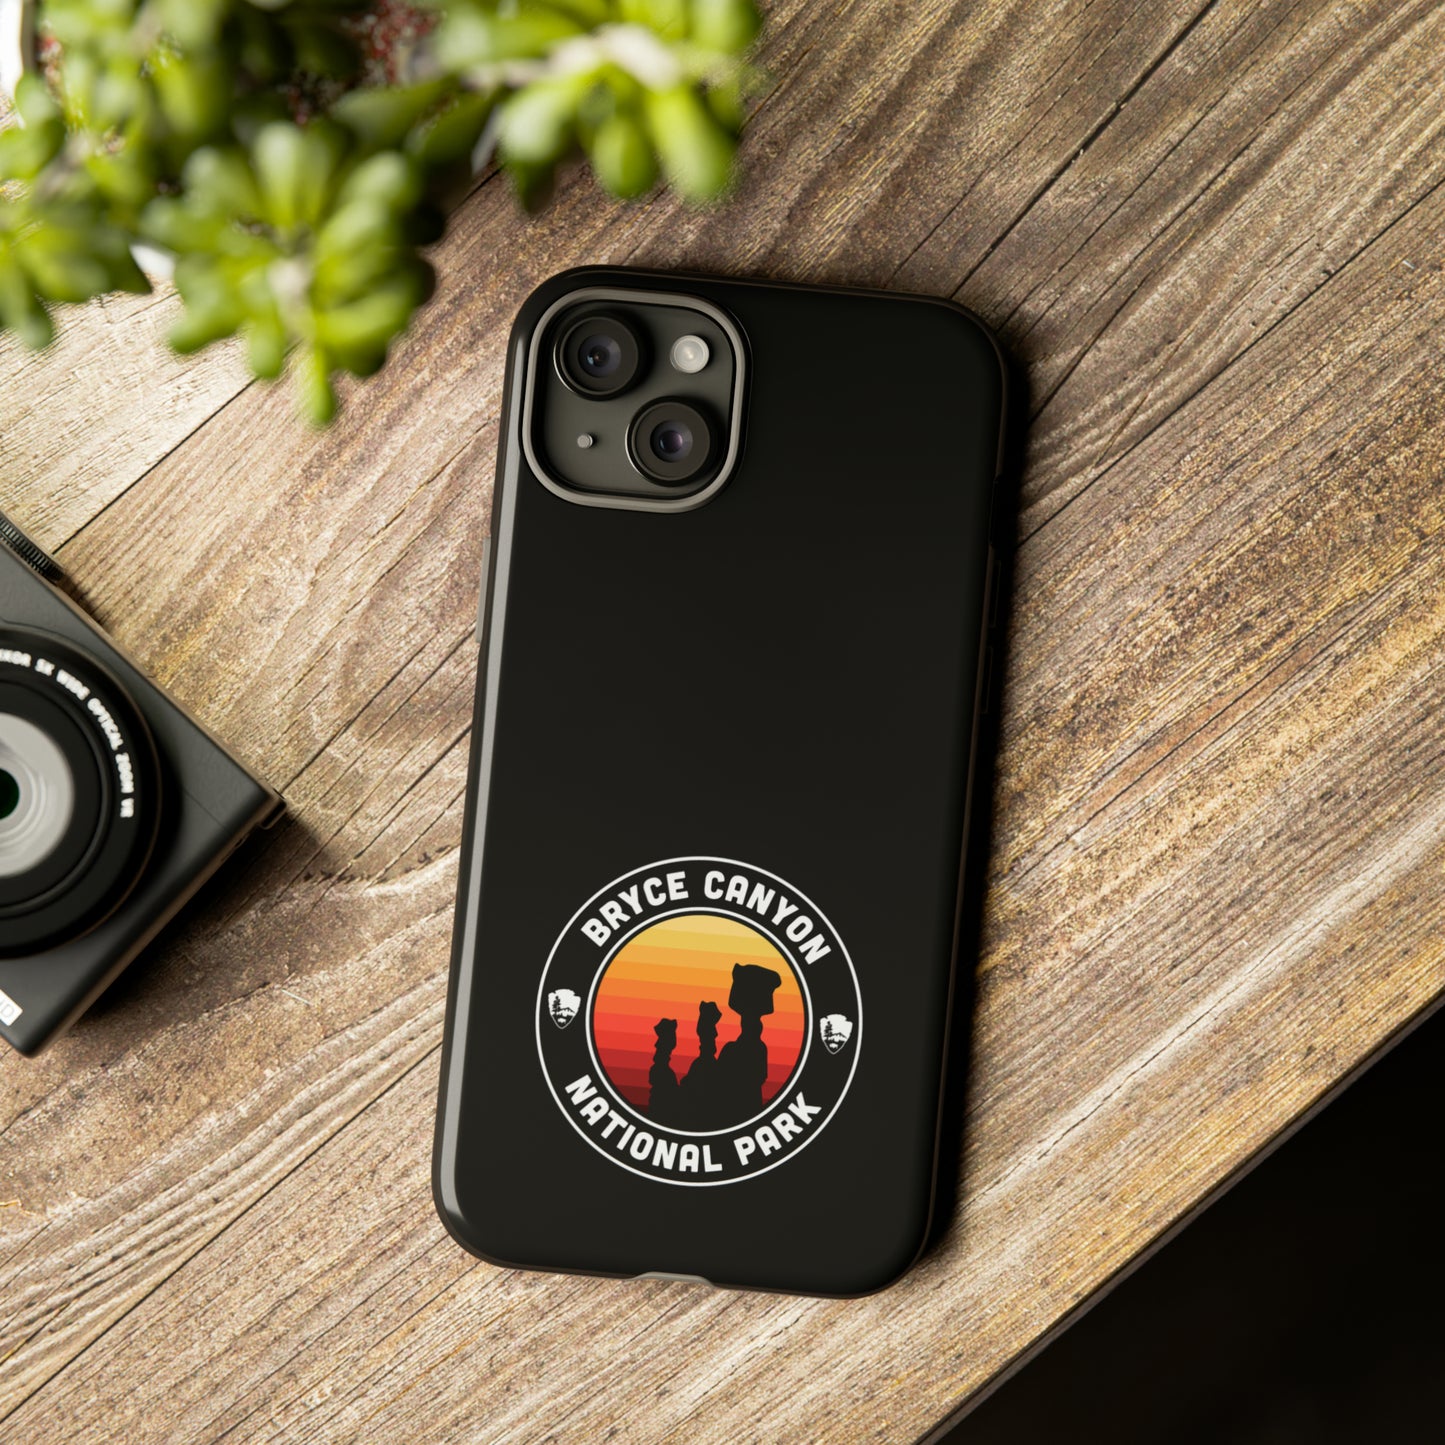 Bryce Canyon National Park Phone Case - Round Emblem Design